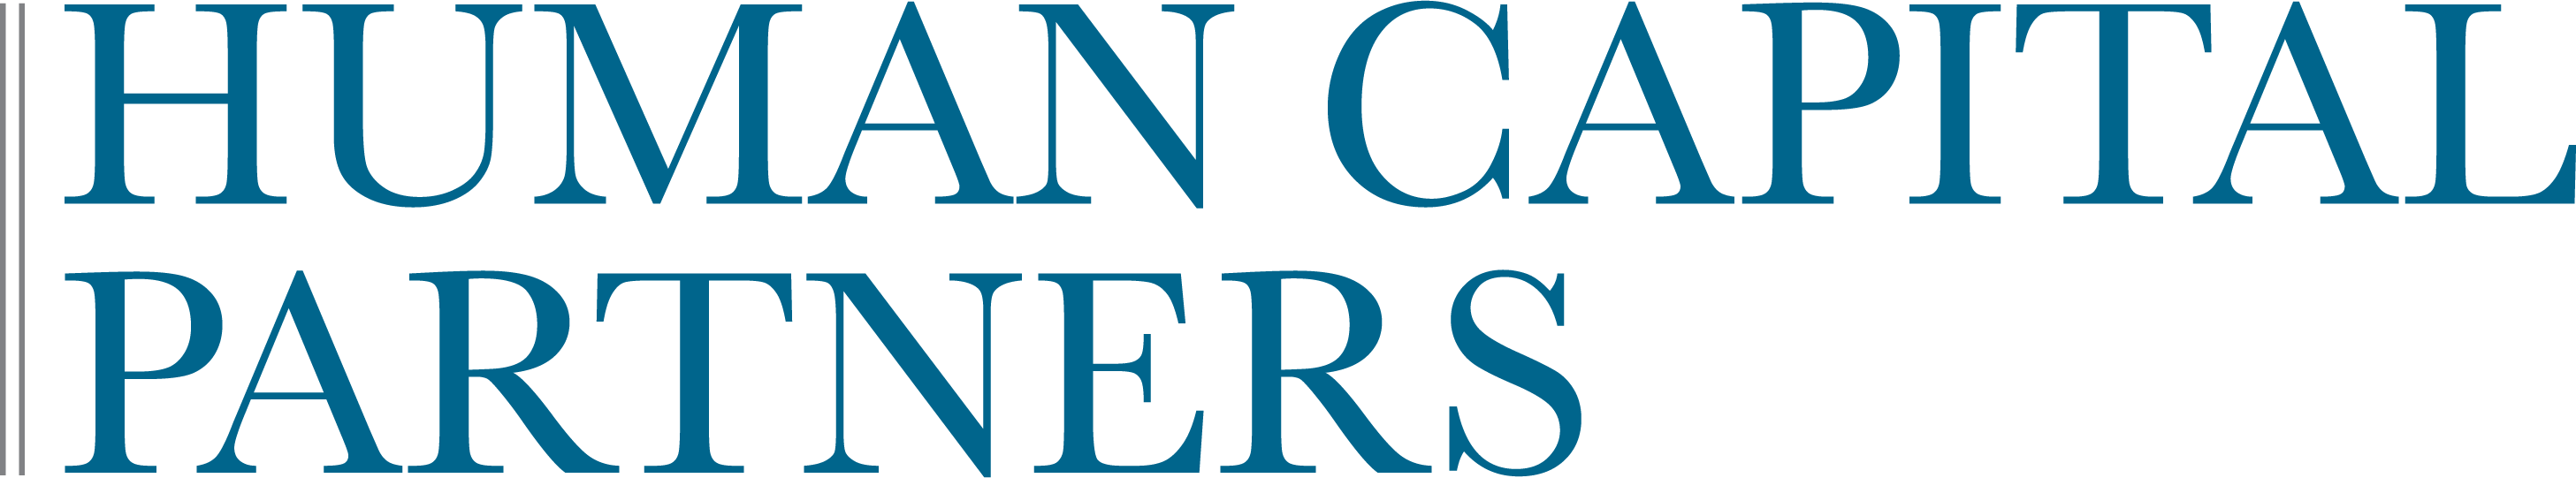 Human Capital Partners Logo